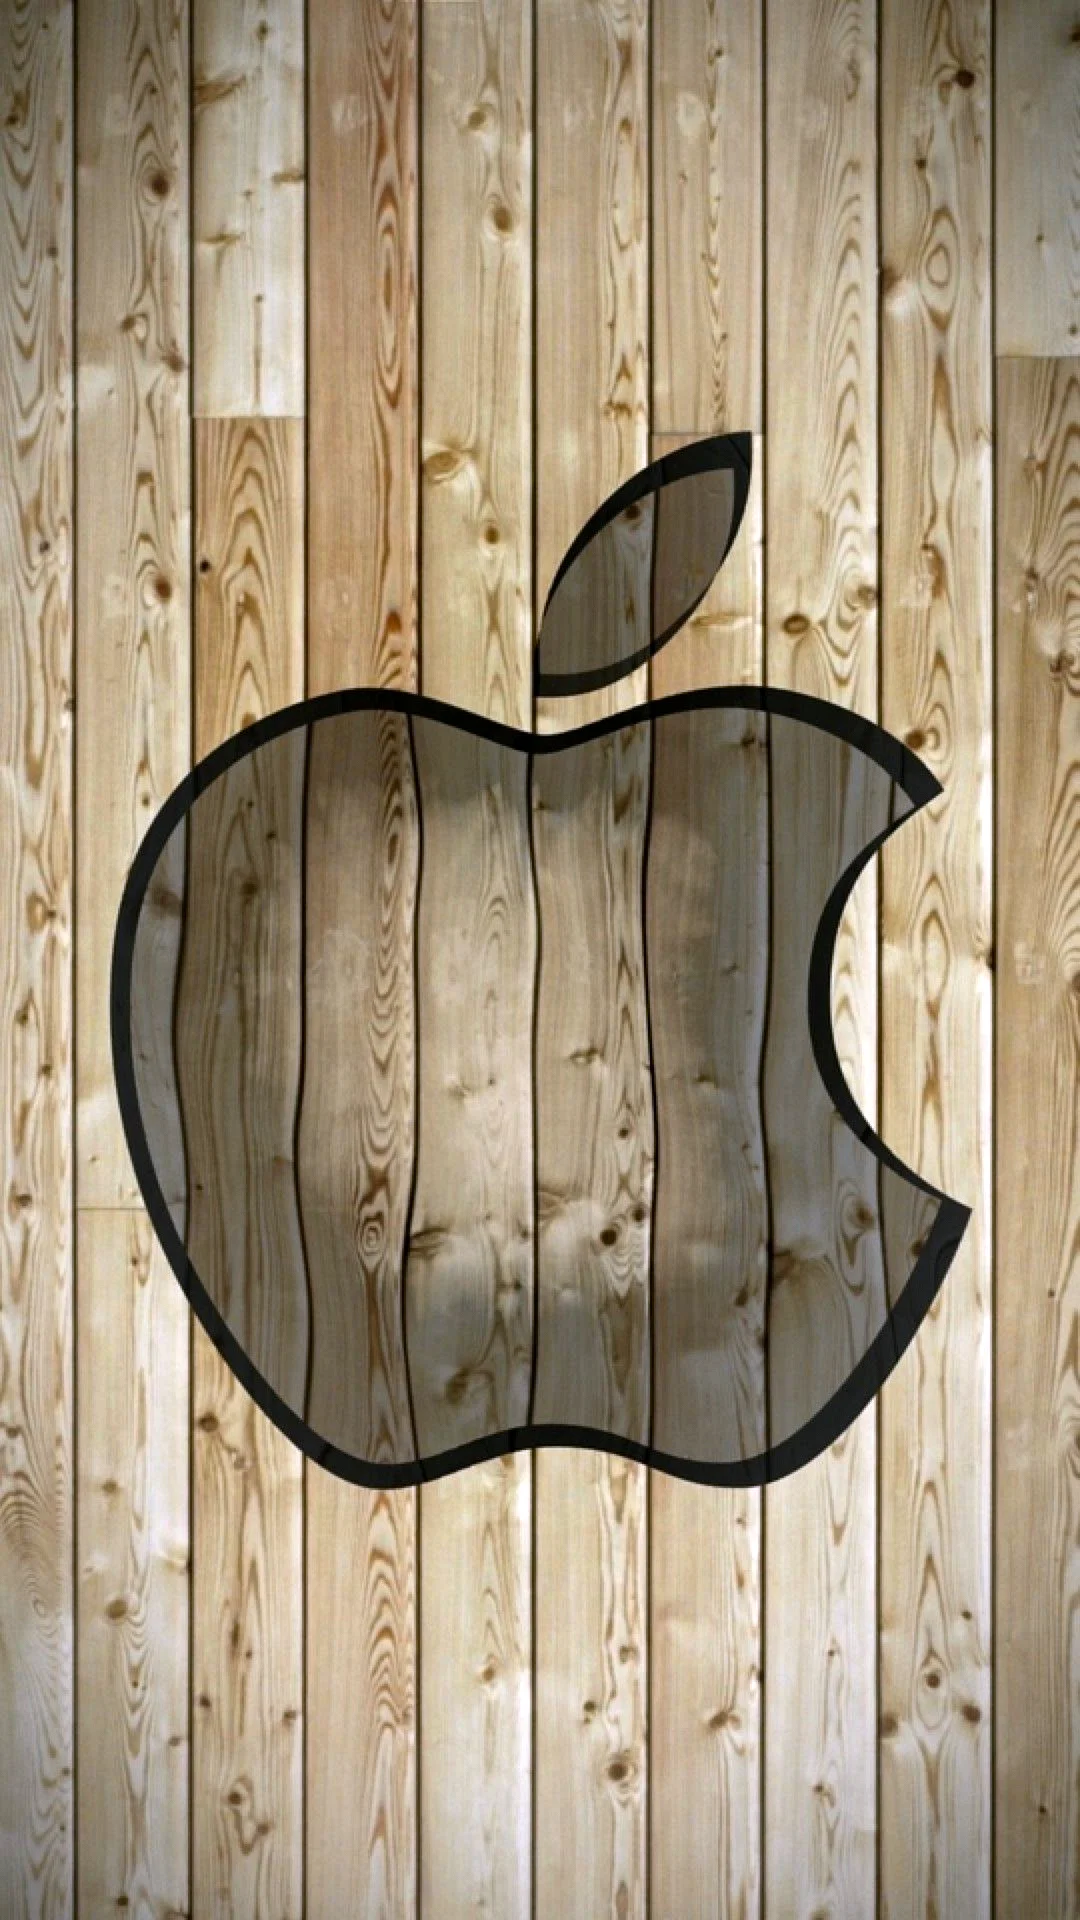 Apple Logo Wallpaper For iPhone